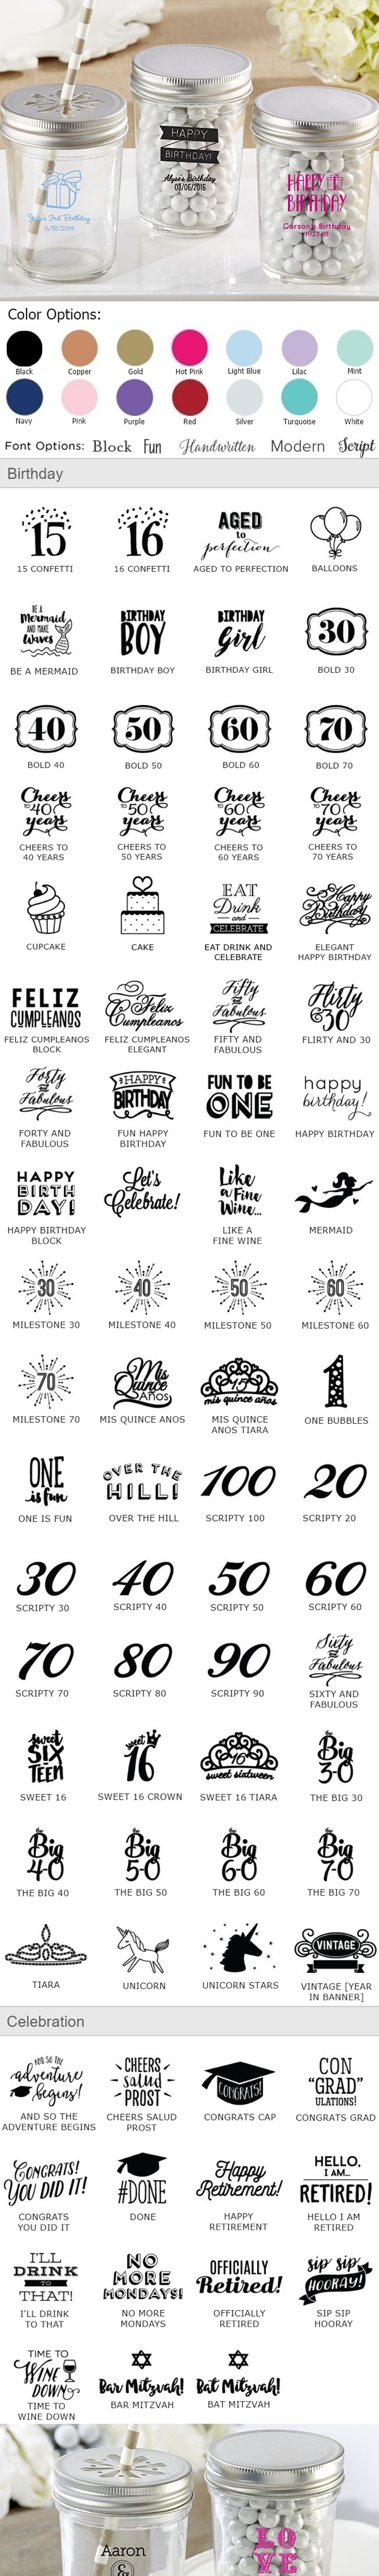 Personalized Printed 8oz Mason Jars with Birthday Designs (Set of 12)